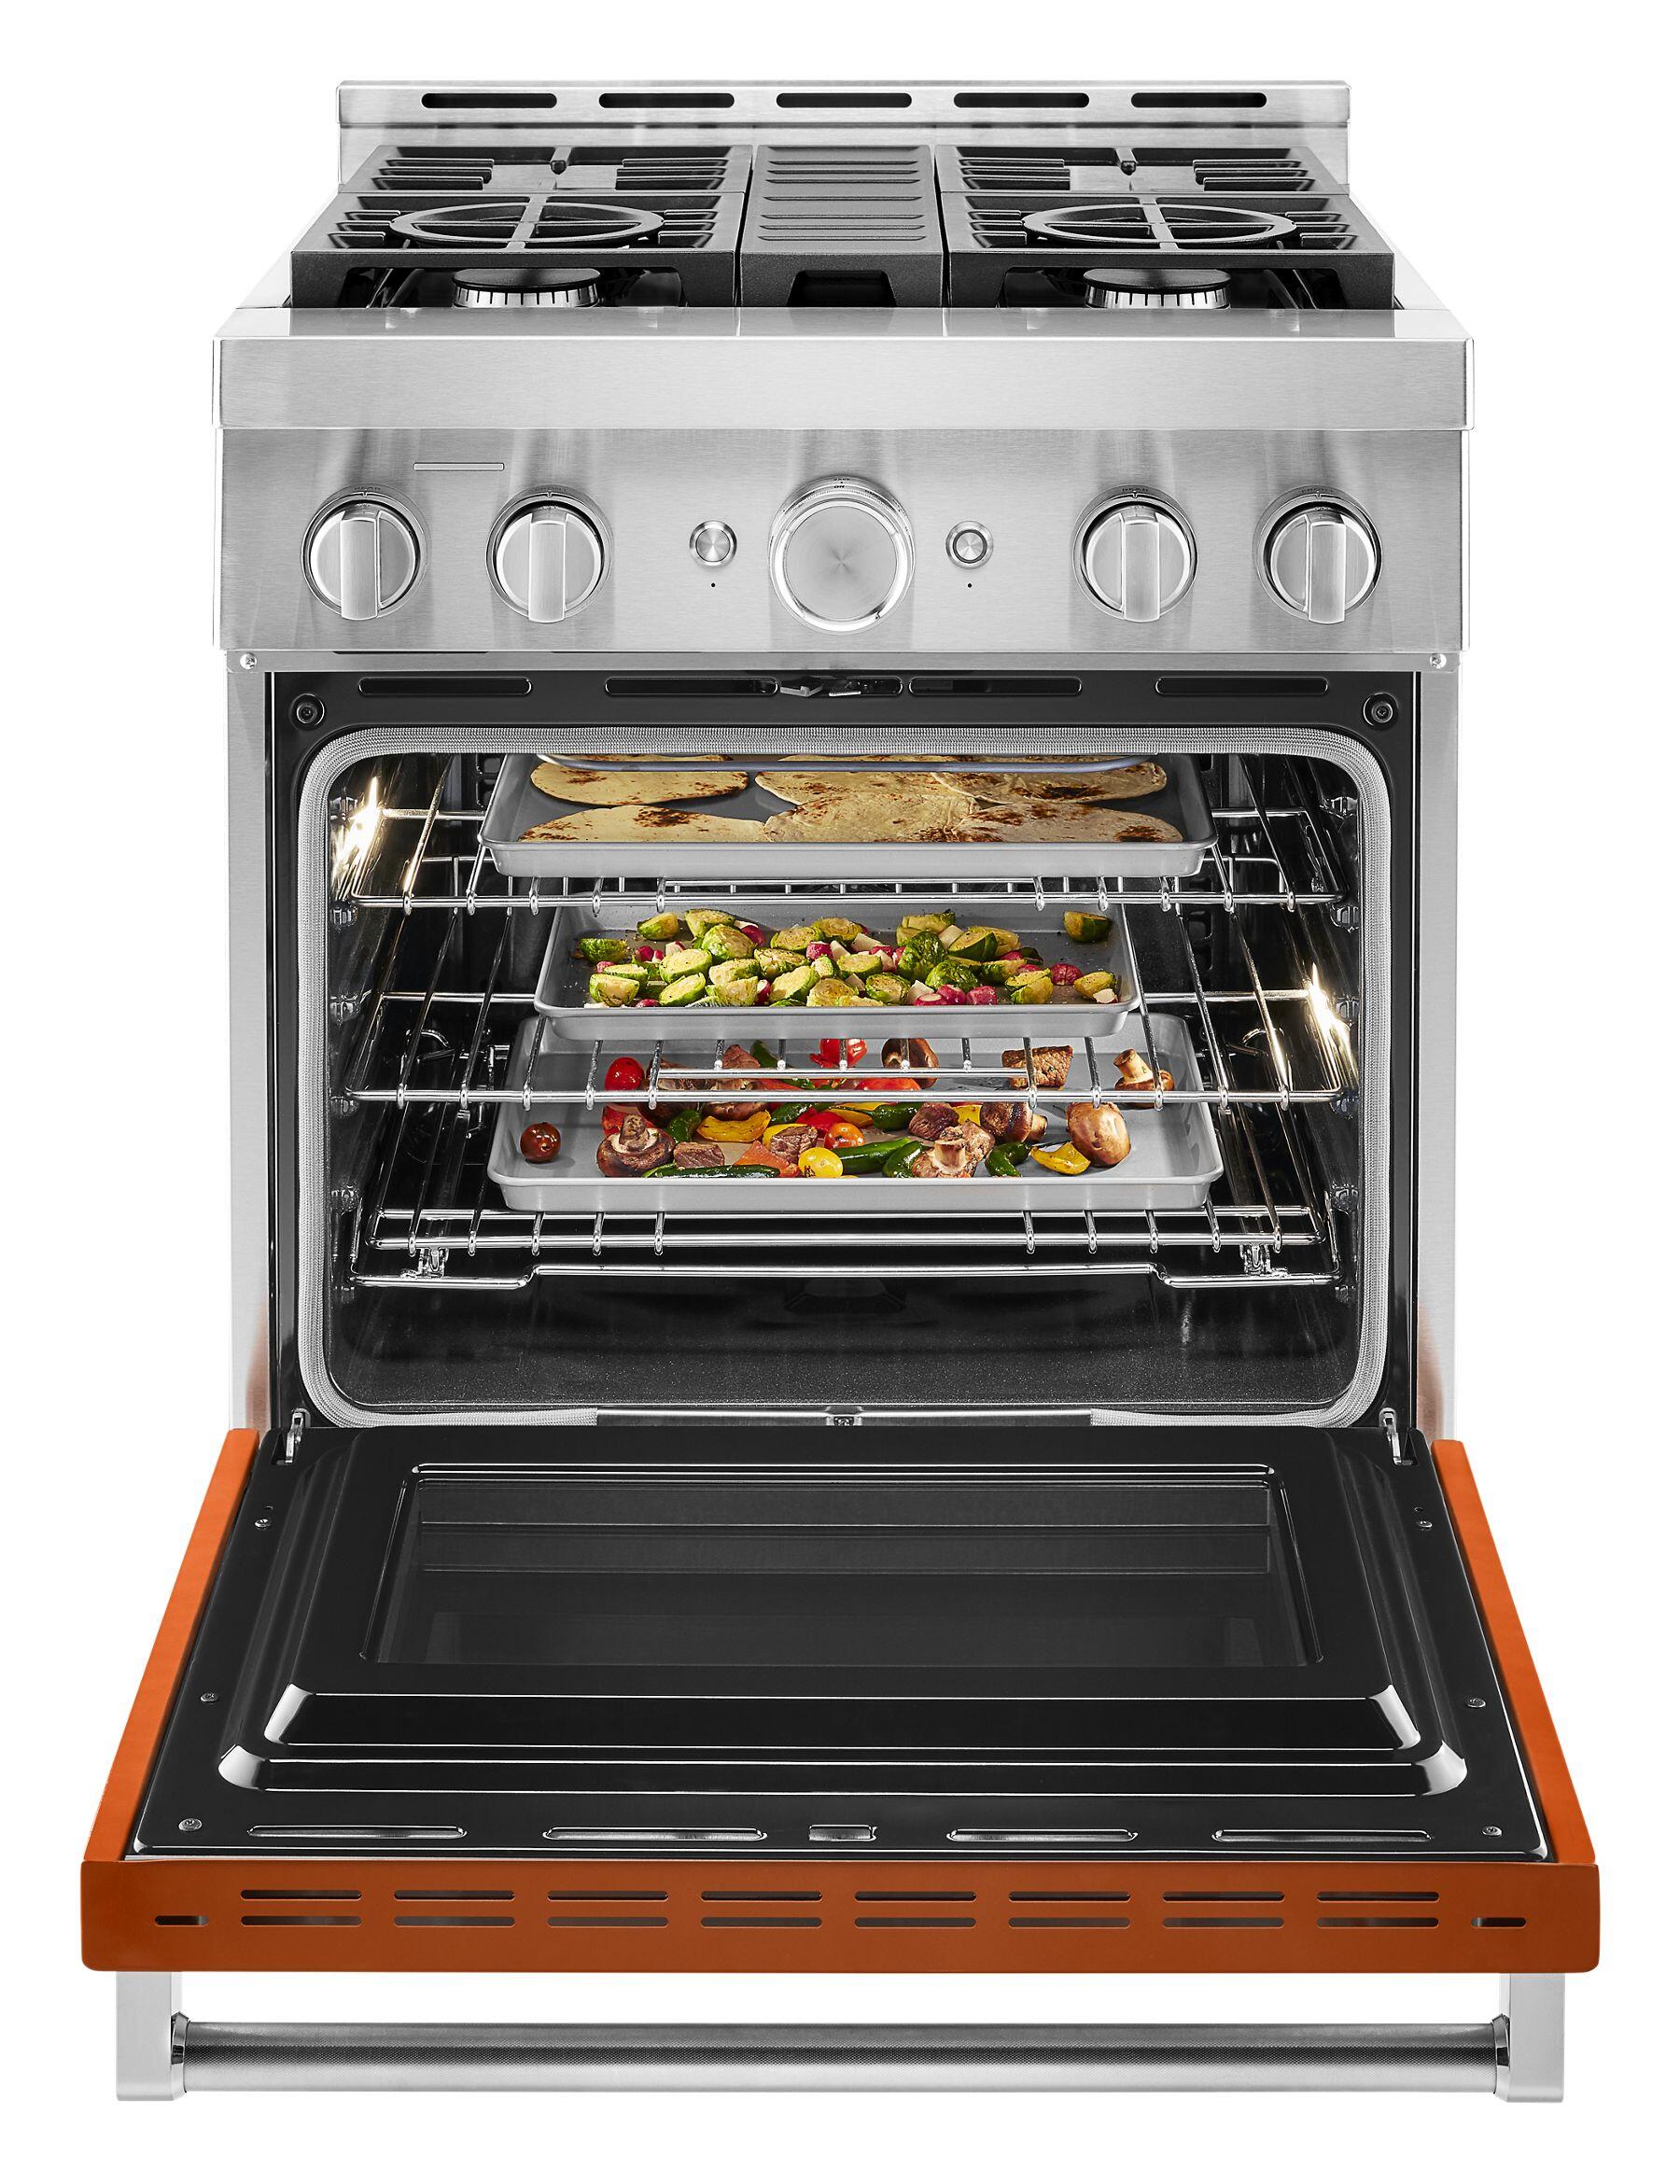 Kitchenaid KFGC500JSC Kitchenaid® 30'' Smart Commercial-Style Gas Range With 4 Burners - Scorched Orange